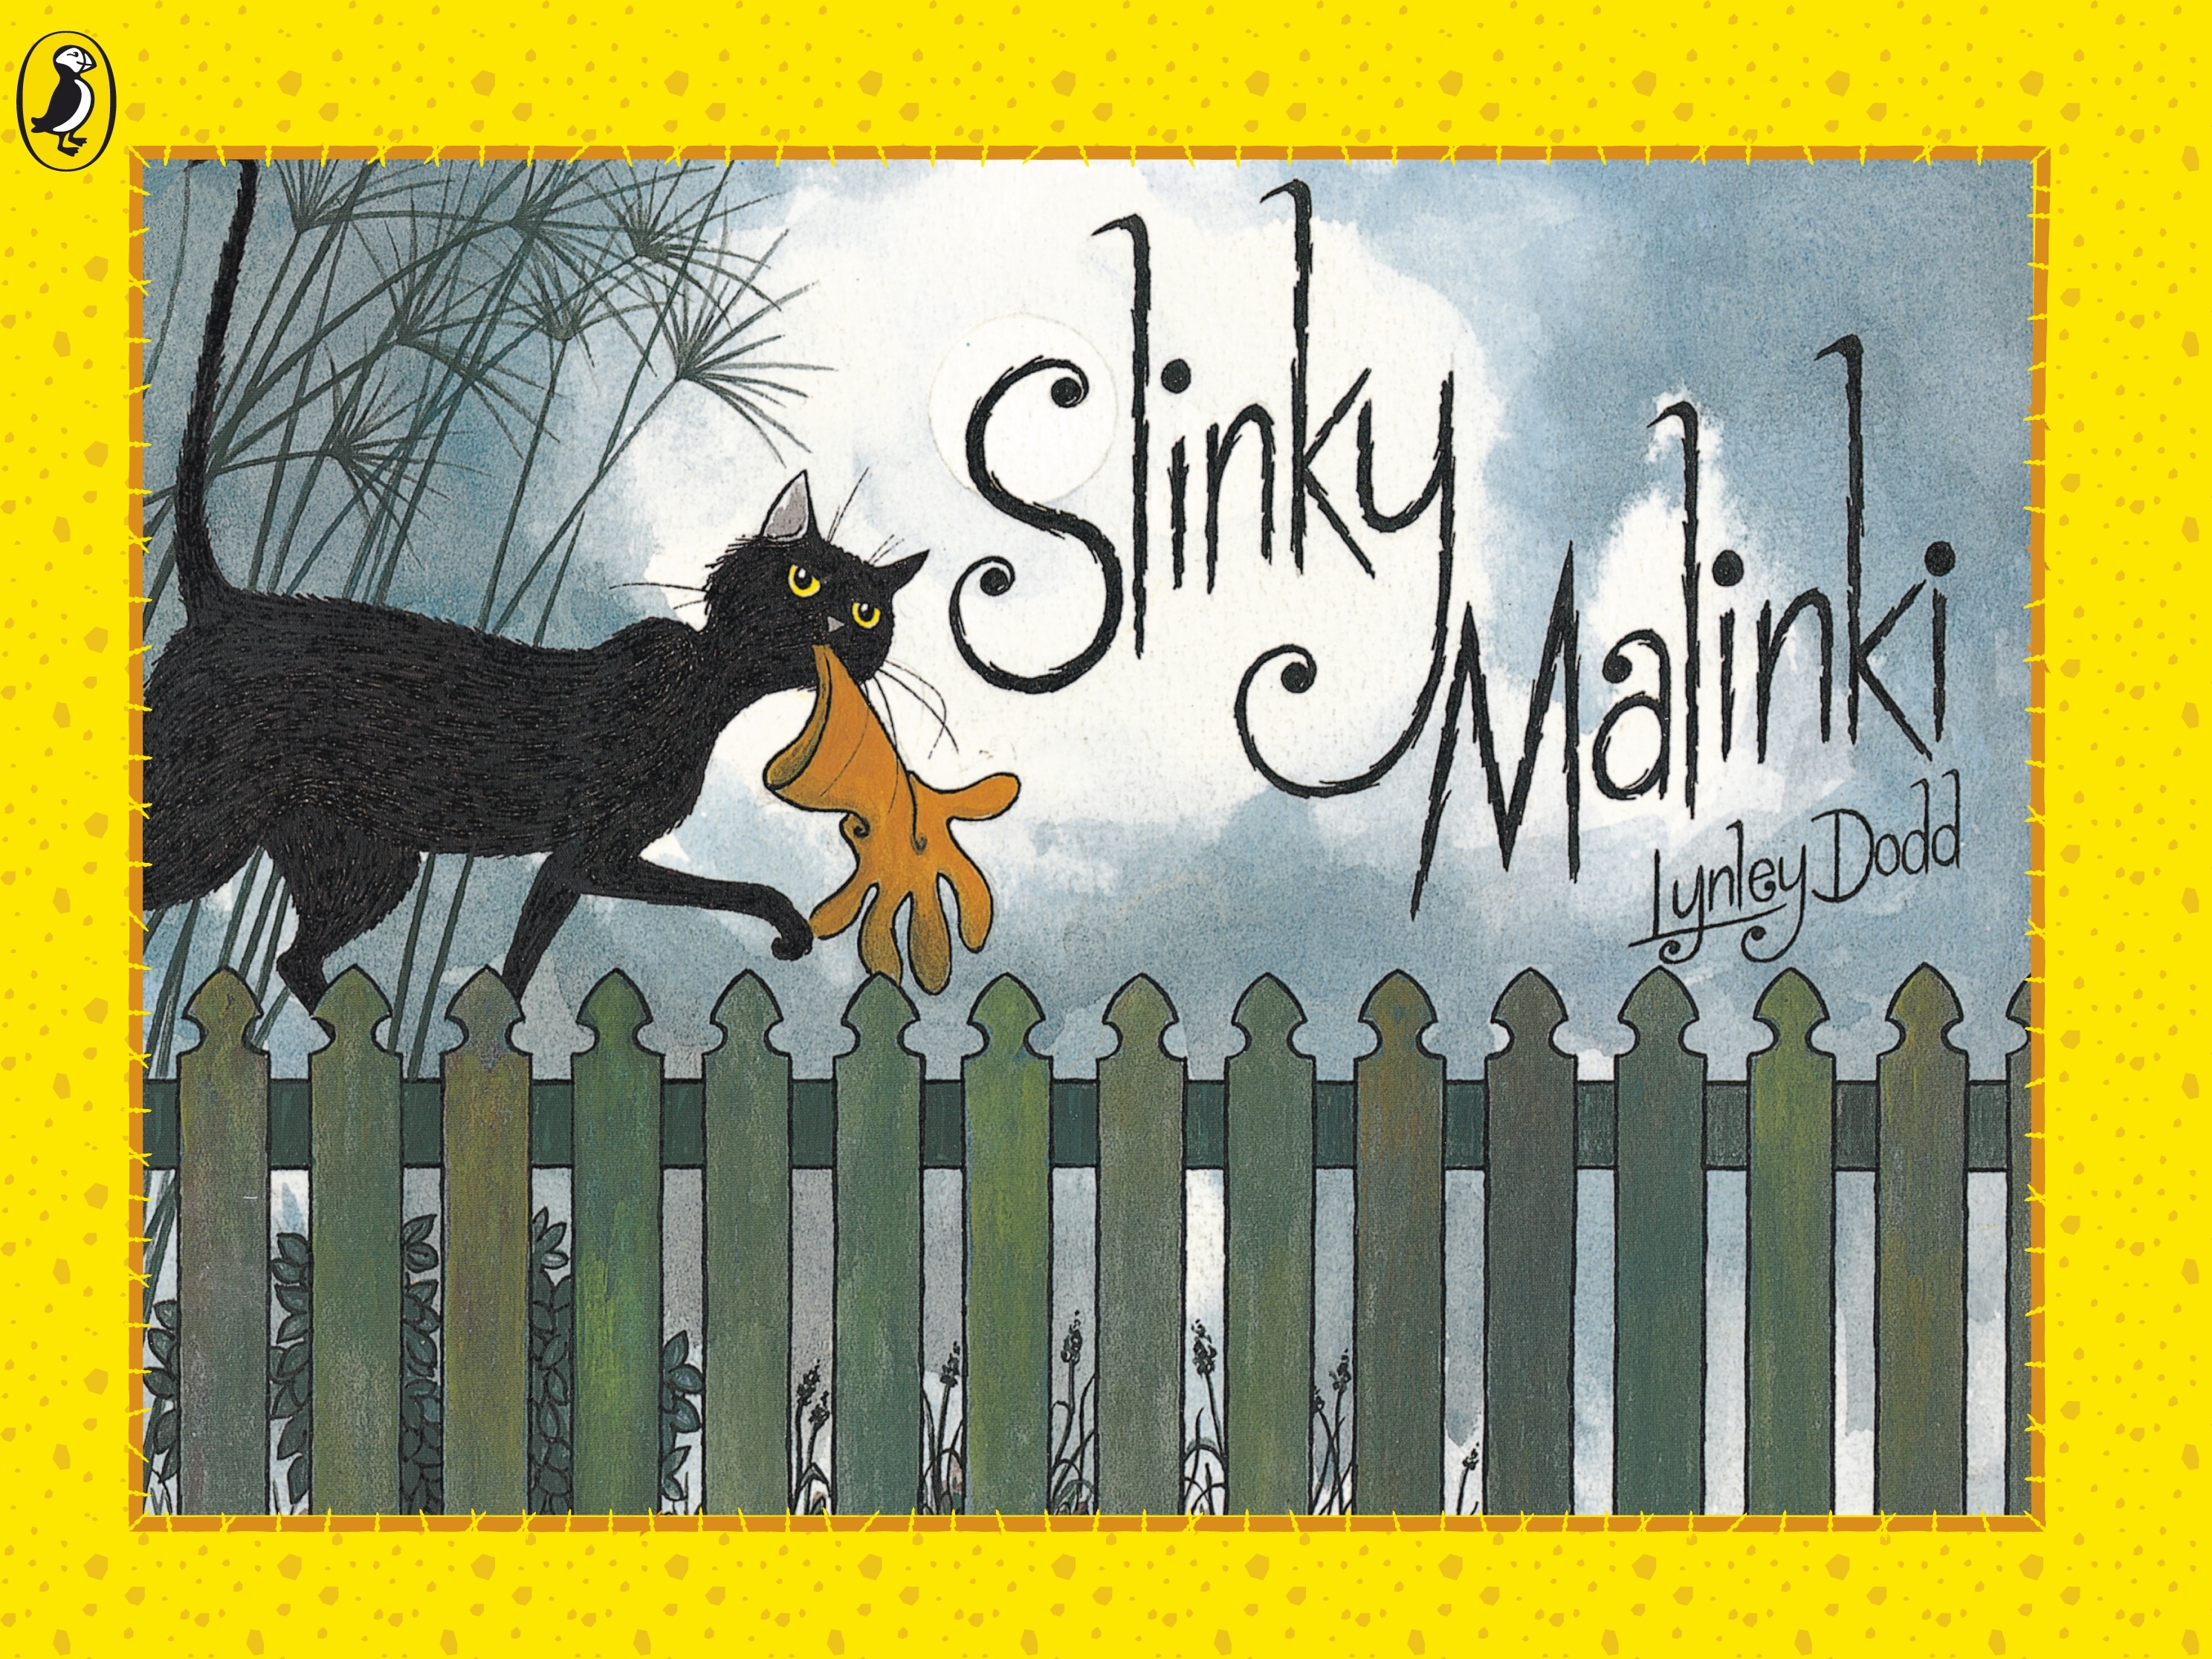 Book “Slinky Malinki” by Lynley Dodd — July 30, 1992